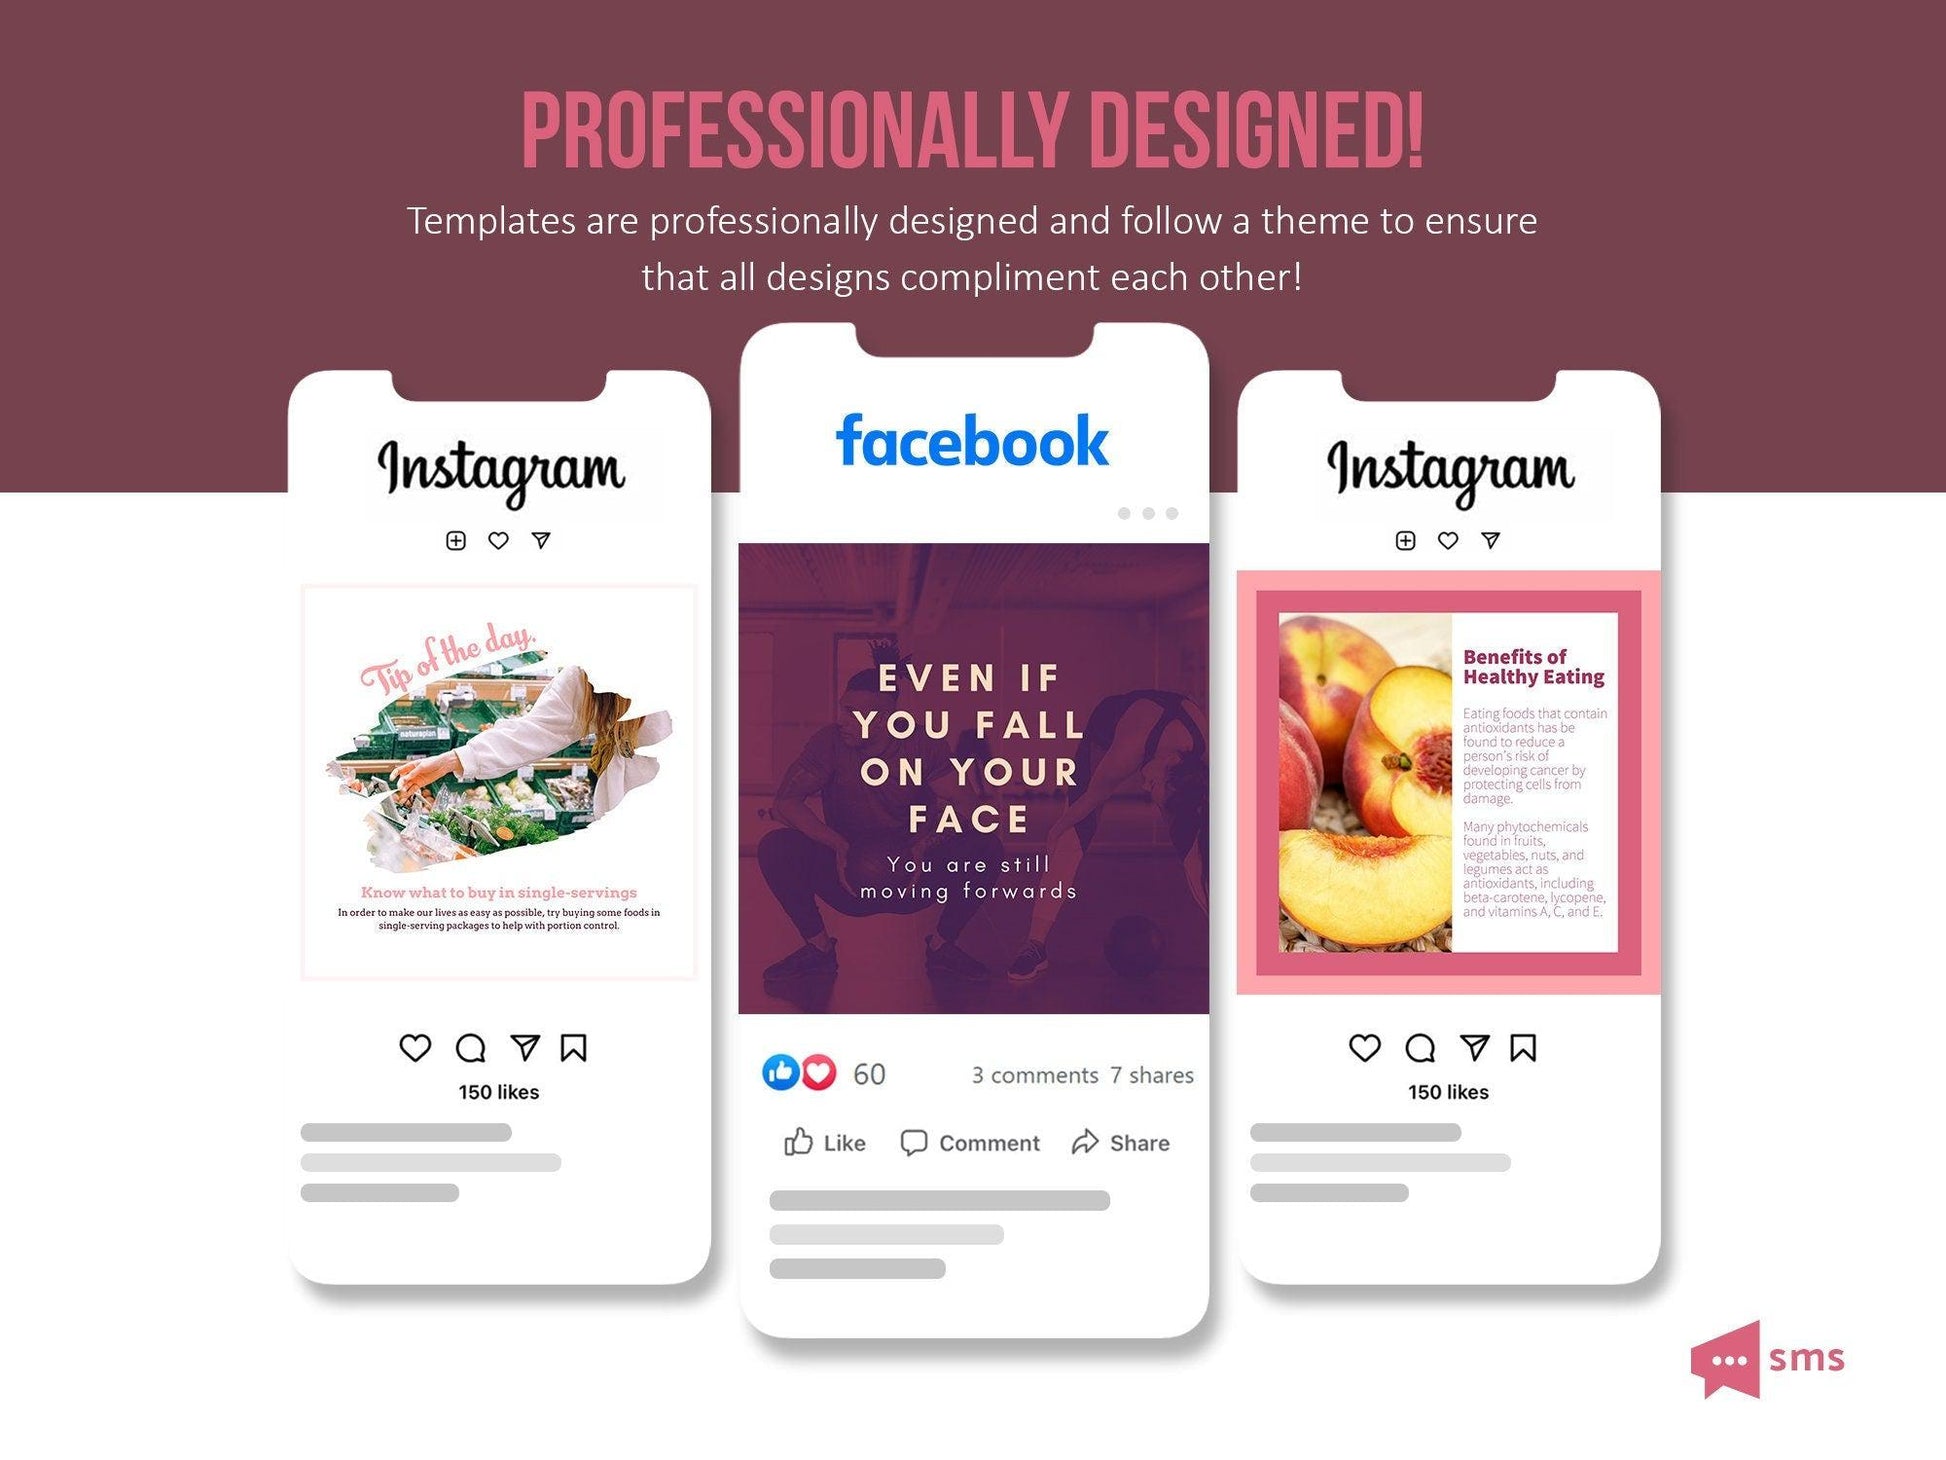 365 Nutrition Instagram Template Bundle For Social Media (crimson berry)